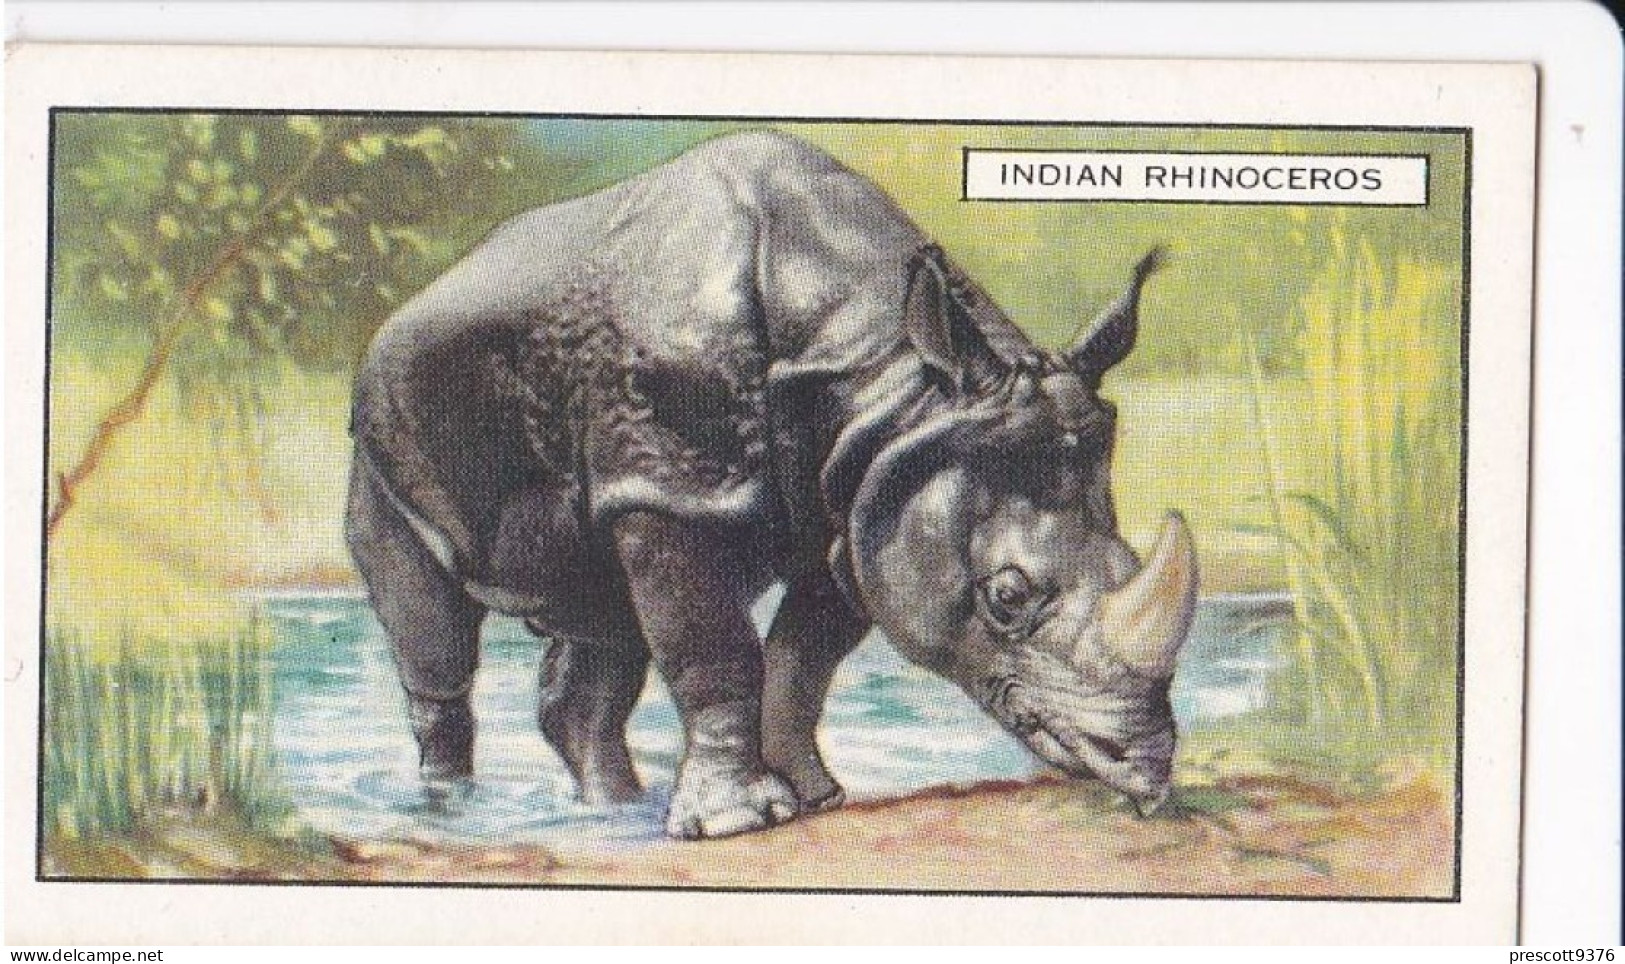 Wild Animals 1937 - 18 Indian Rhinocerus - Gallaher Cigarette Card - Original - Wildlife - Gallaher